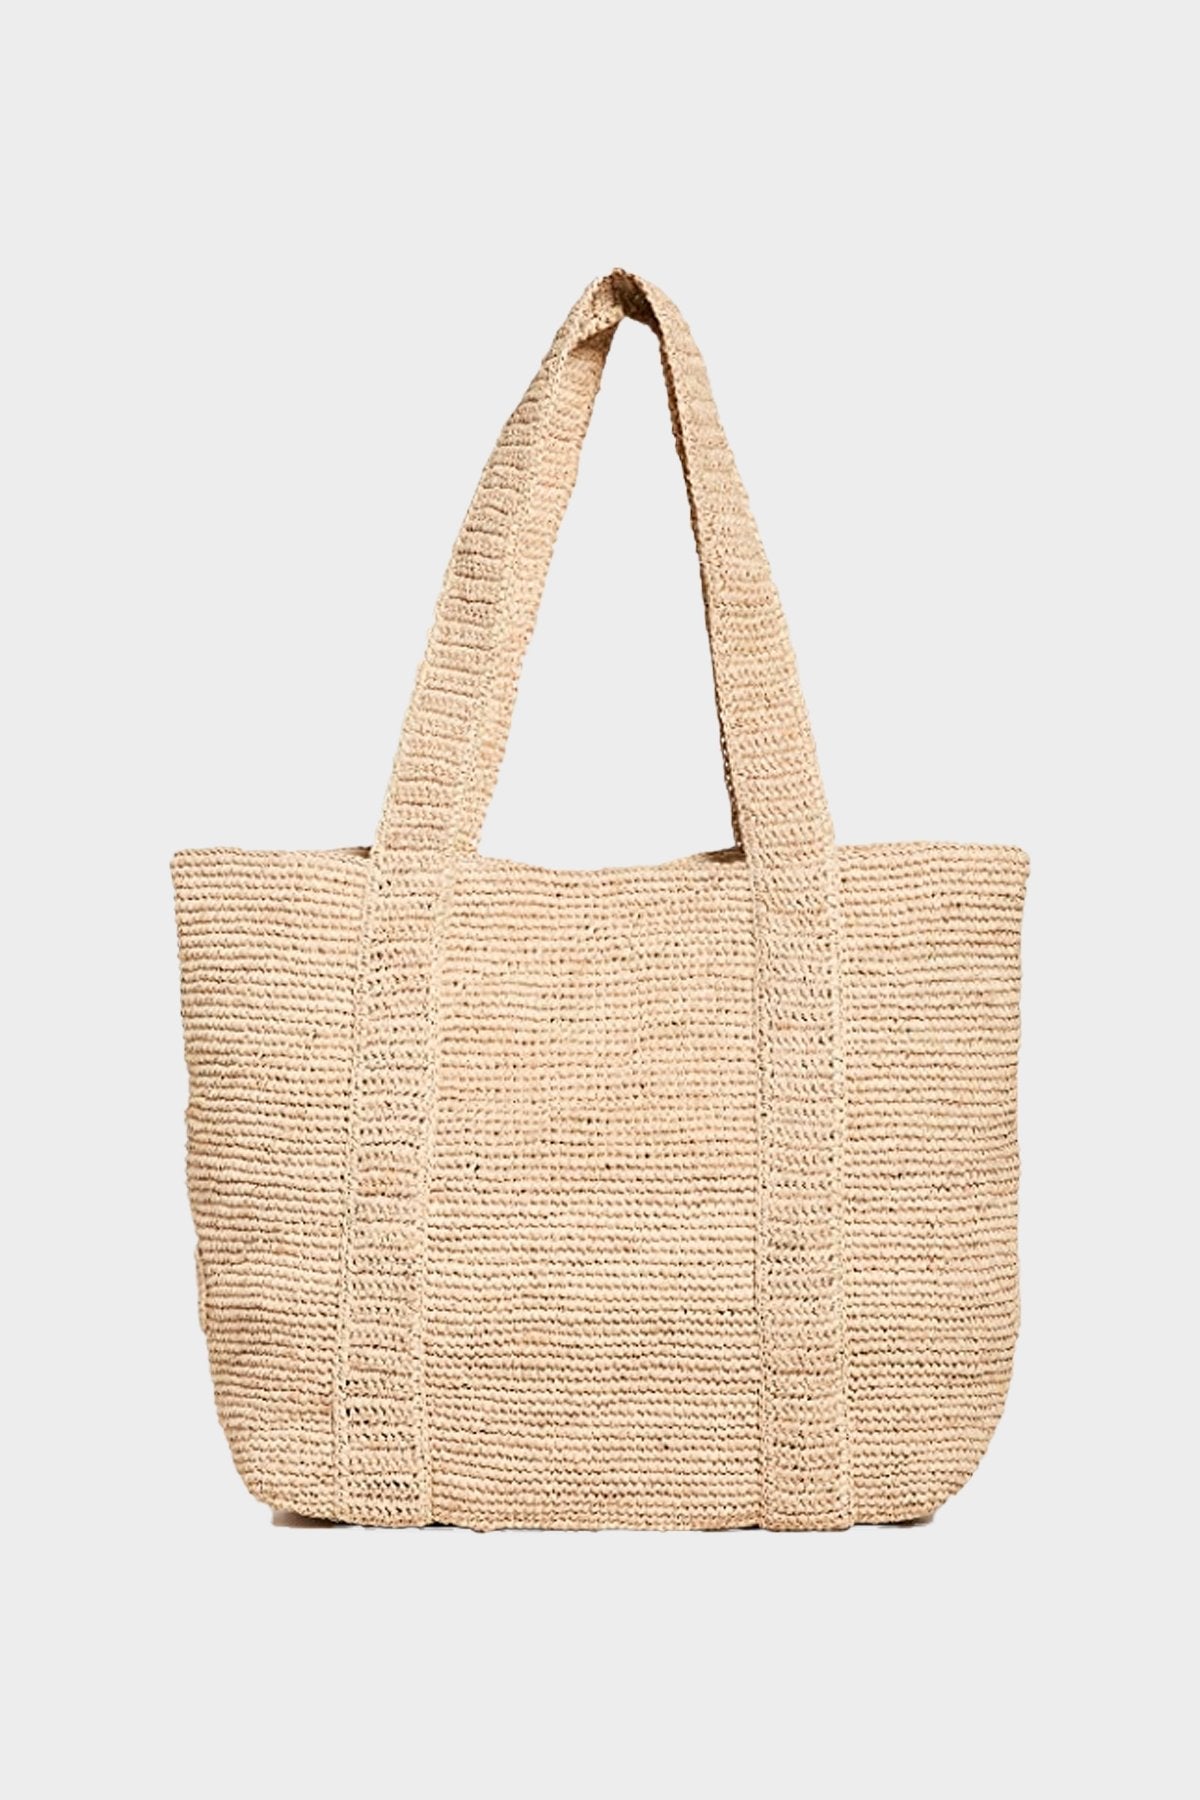 The Original Traveler Bag in Natural - shop-olivia.com